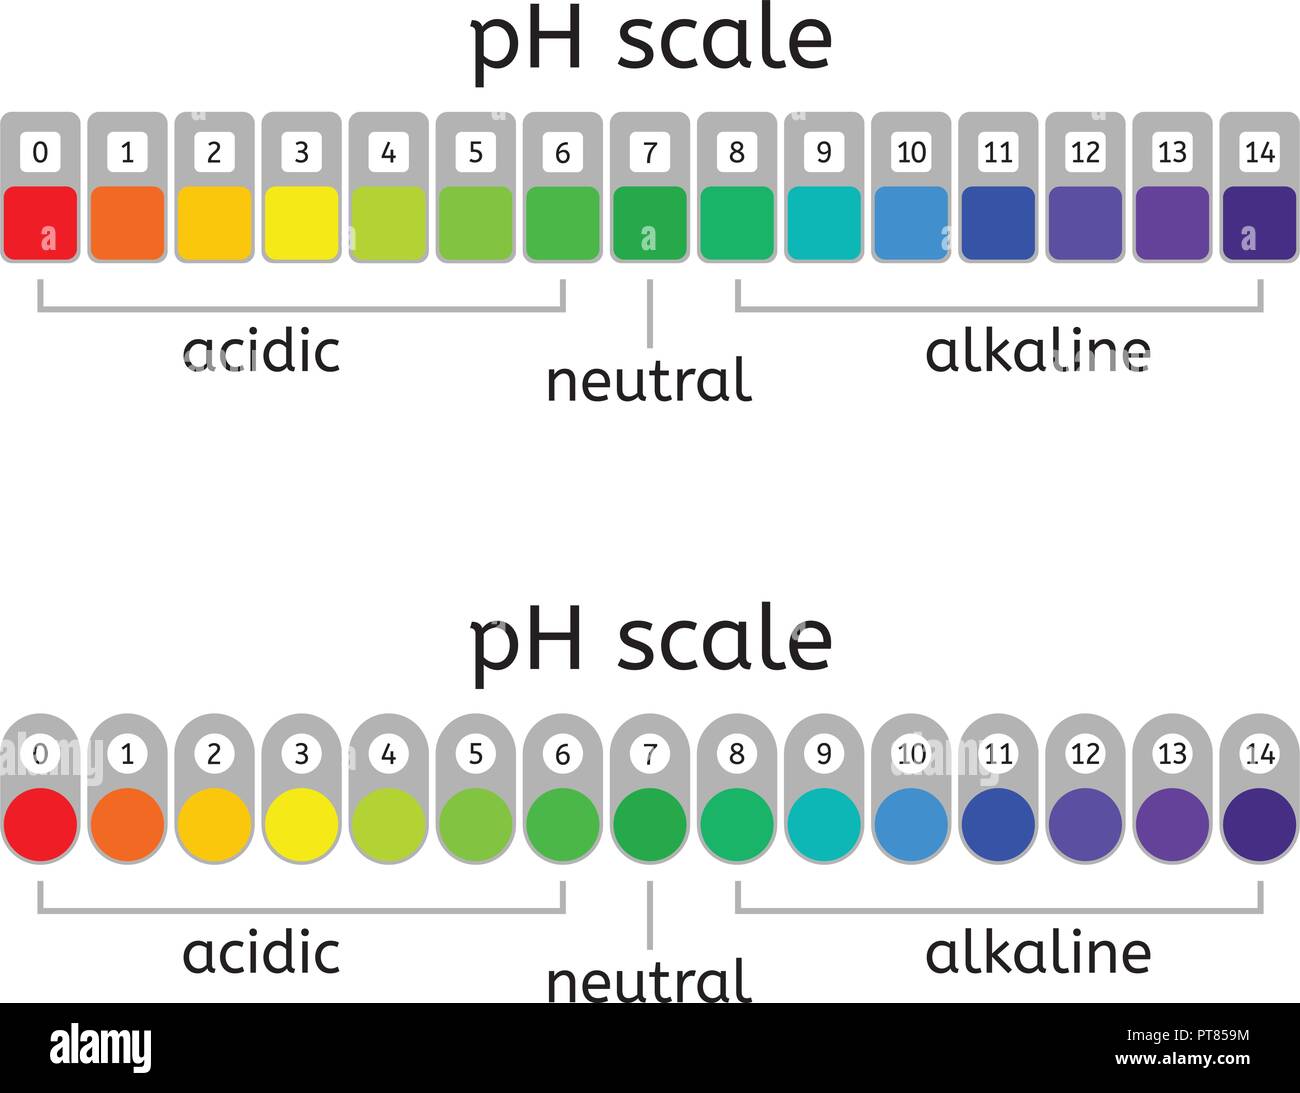 Acidic Vs Alkaline Ph Chart